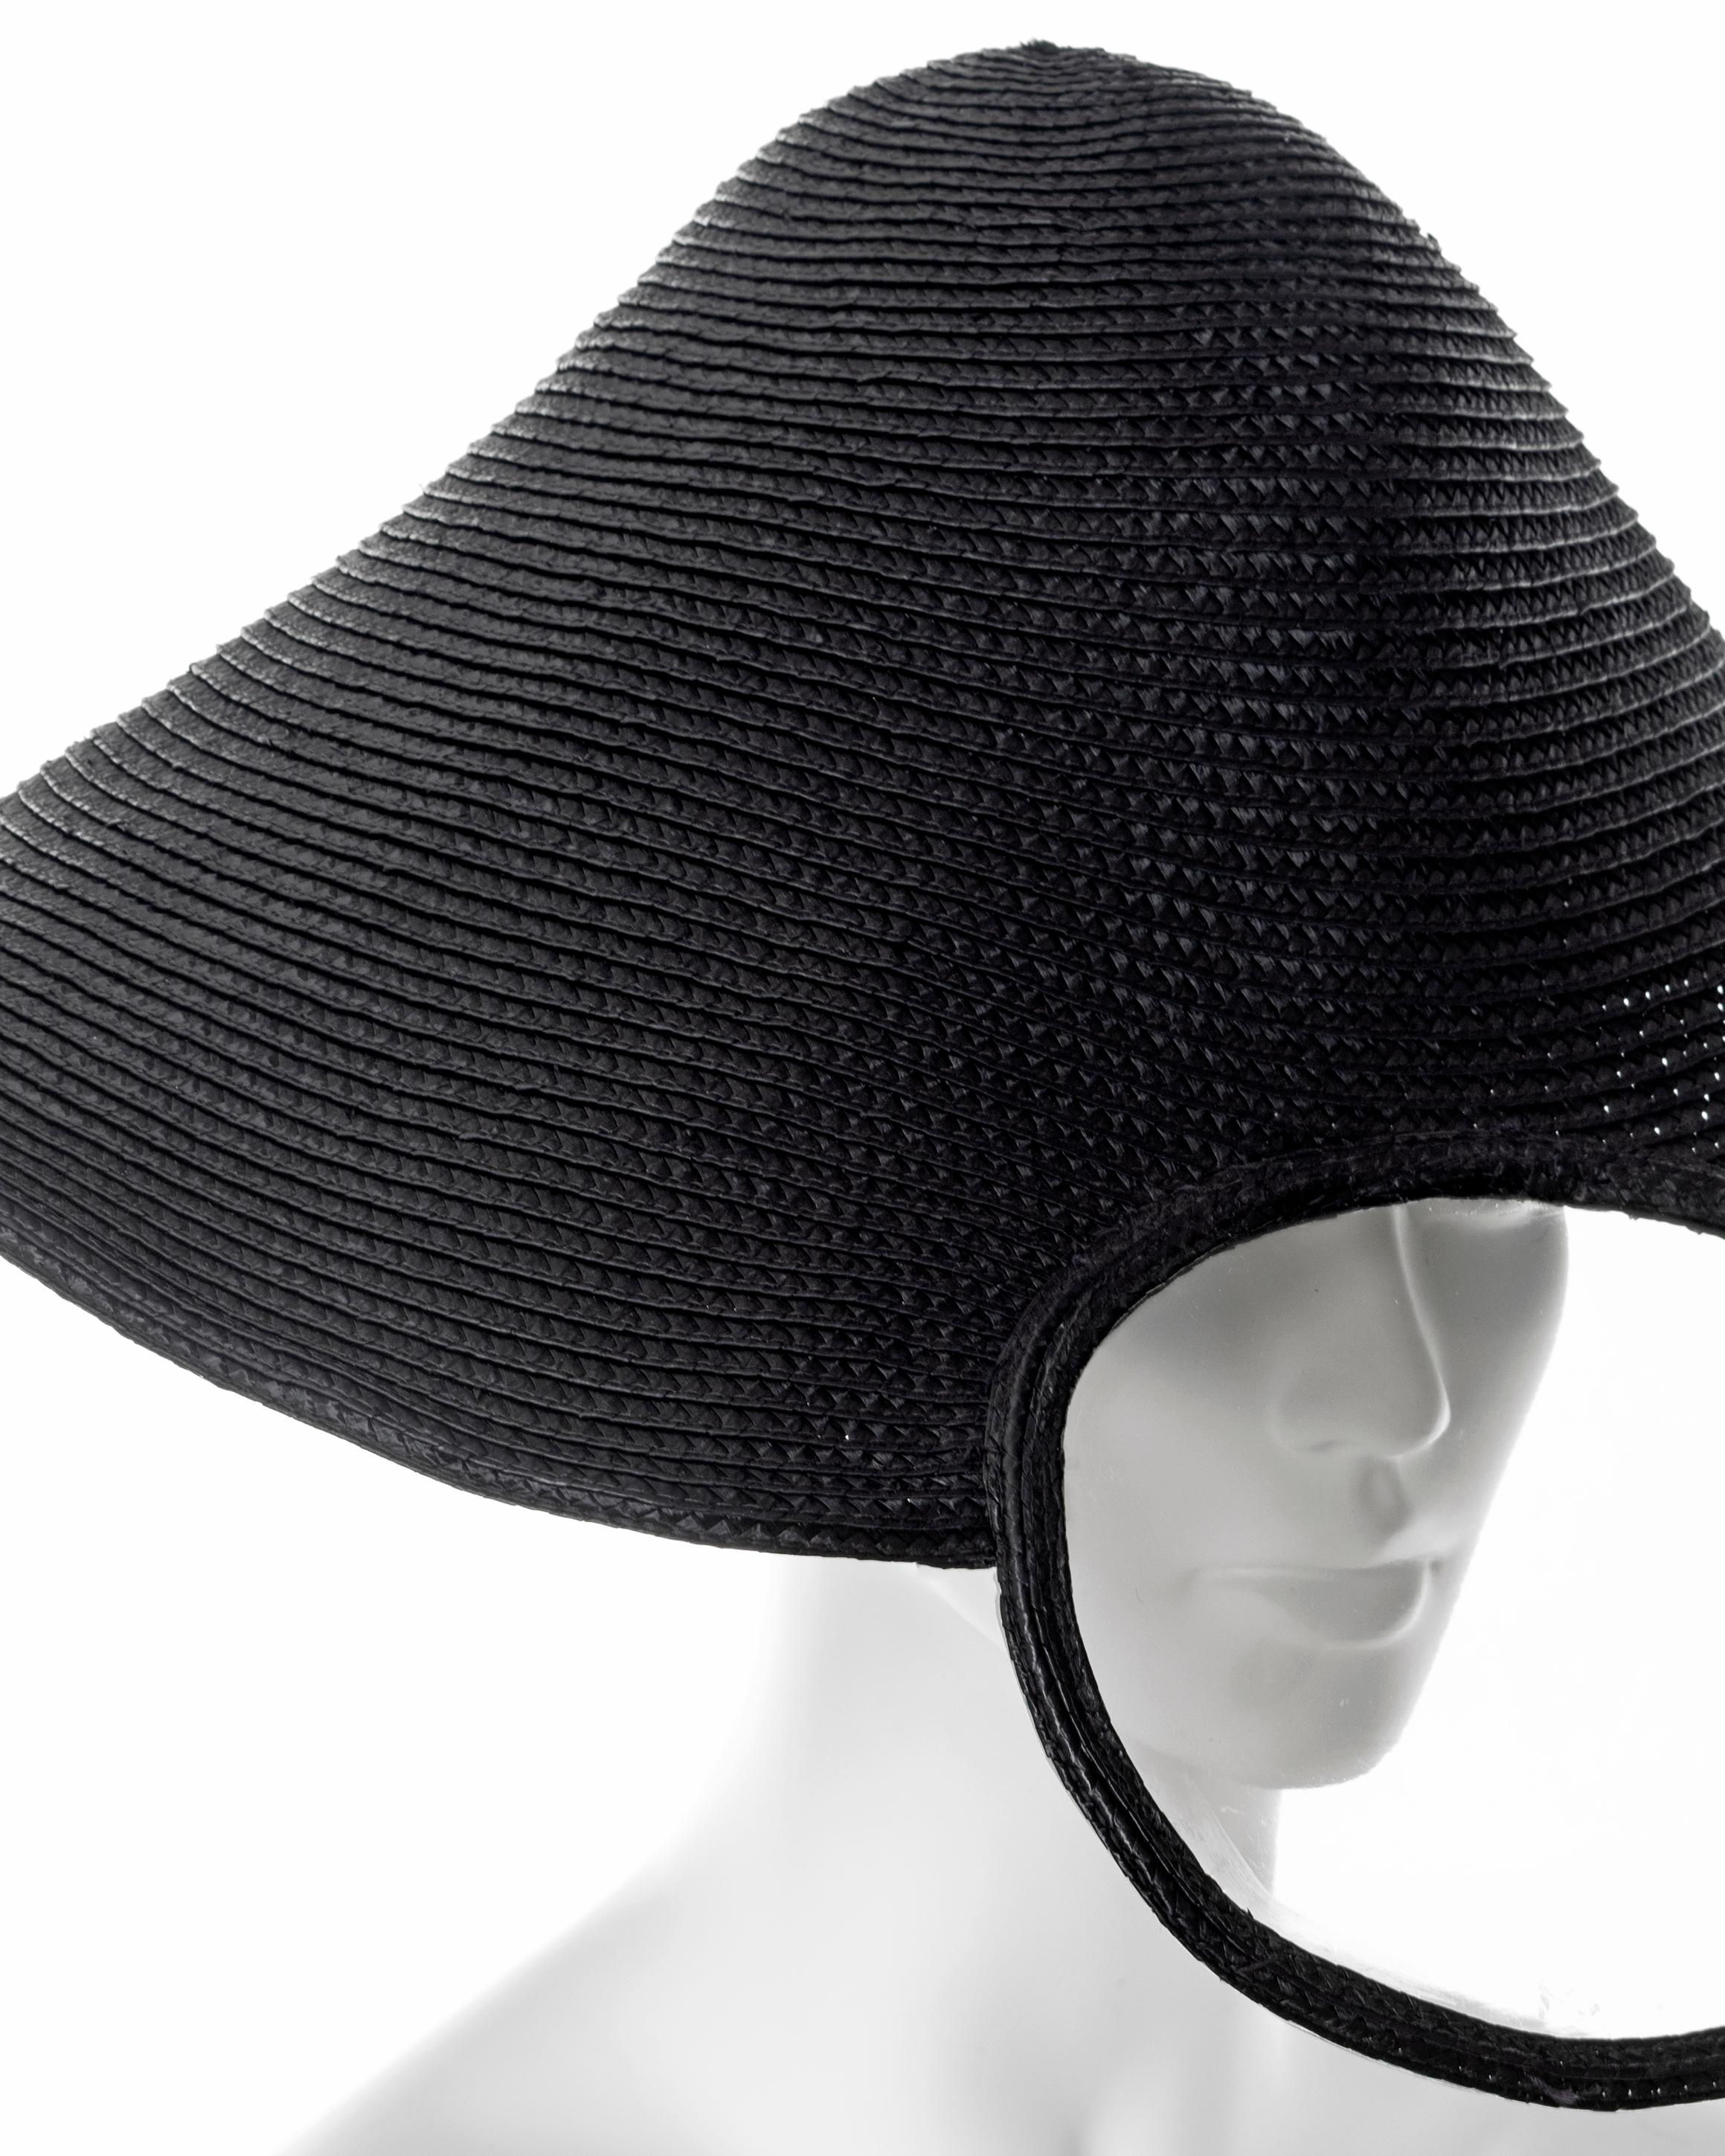 Paco Rabanne x Regis Haute Couture black straw hat with vinyl visor, ss 1994 7